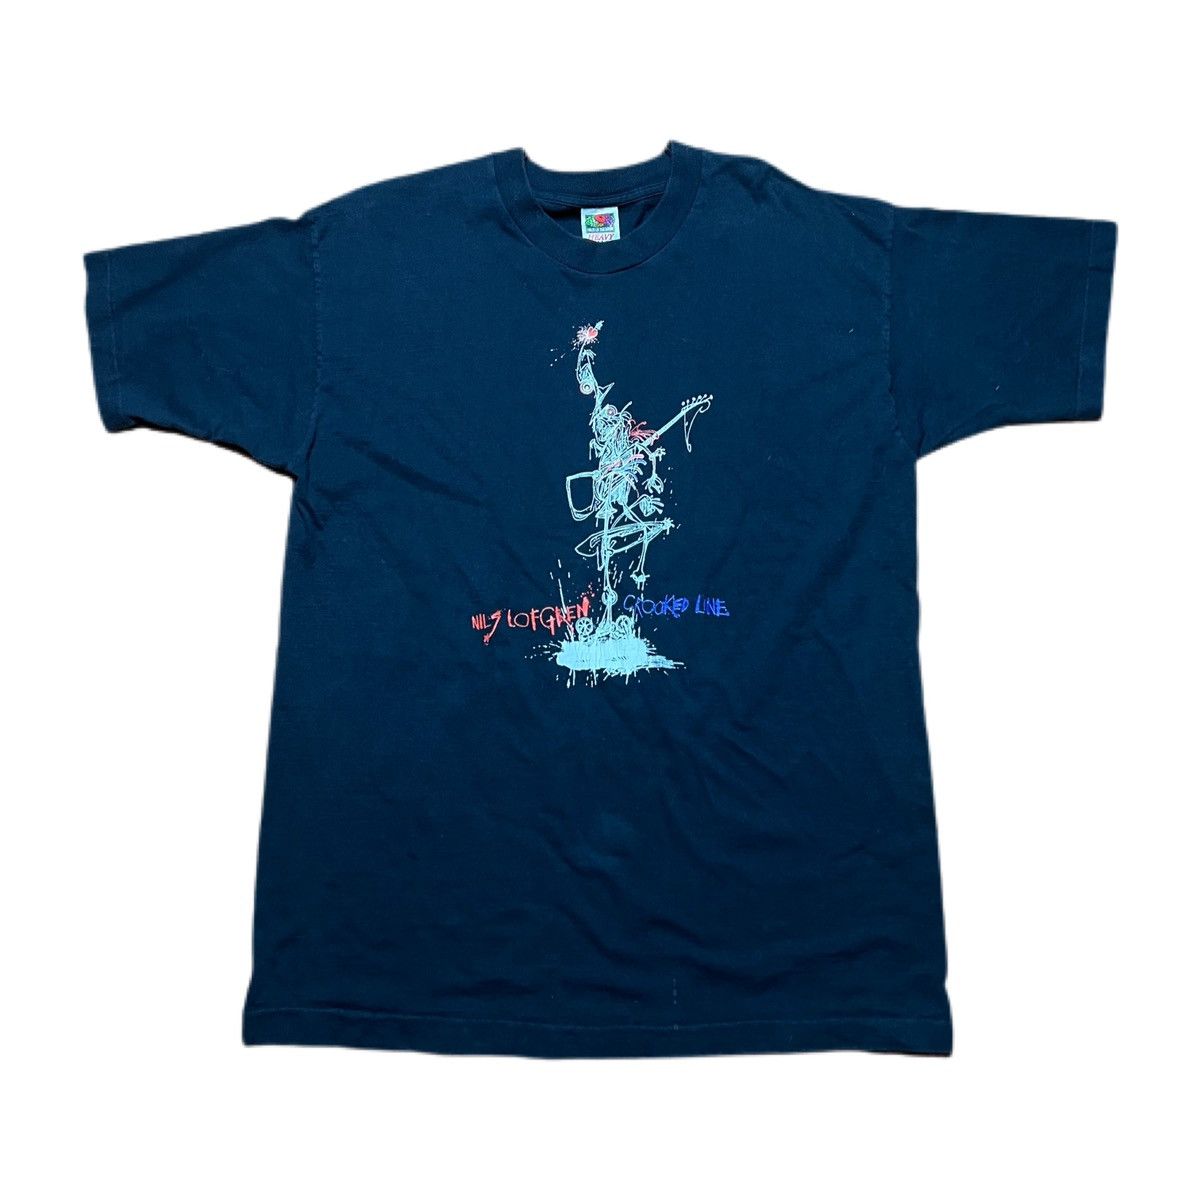 Vintage Vintage Nils Lofgren Crooked Line Band T-Shirt Size US XL / EU 56 / 4 - 1 Preview